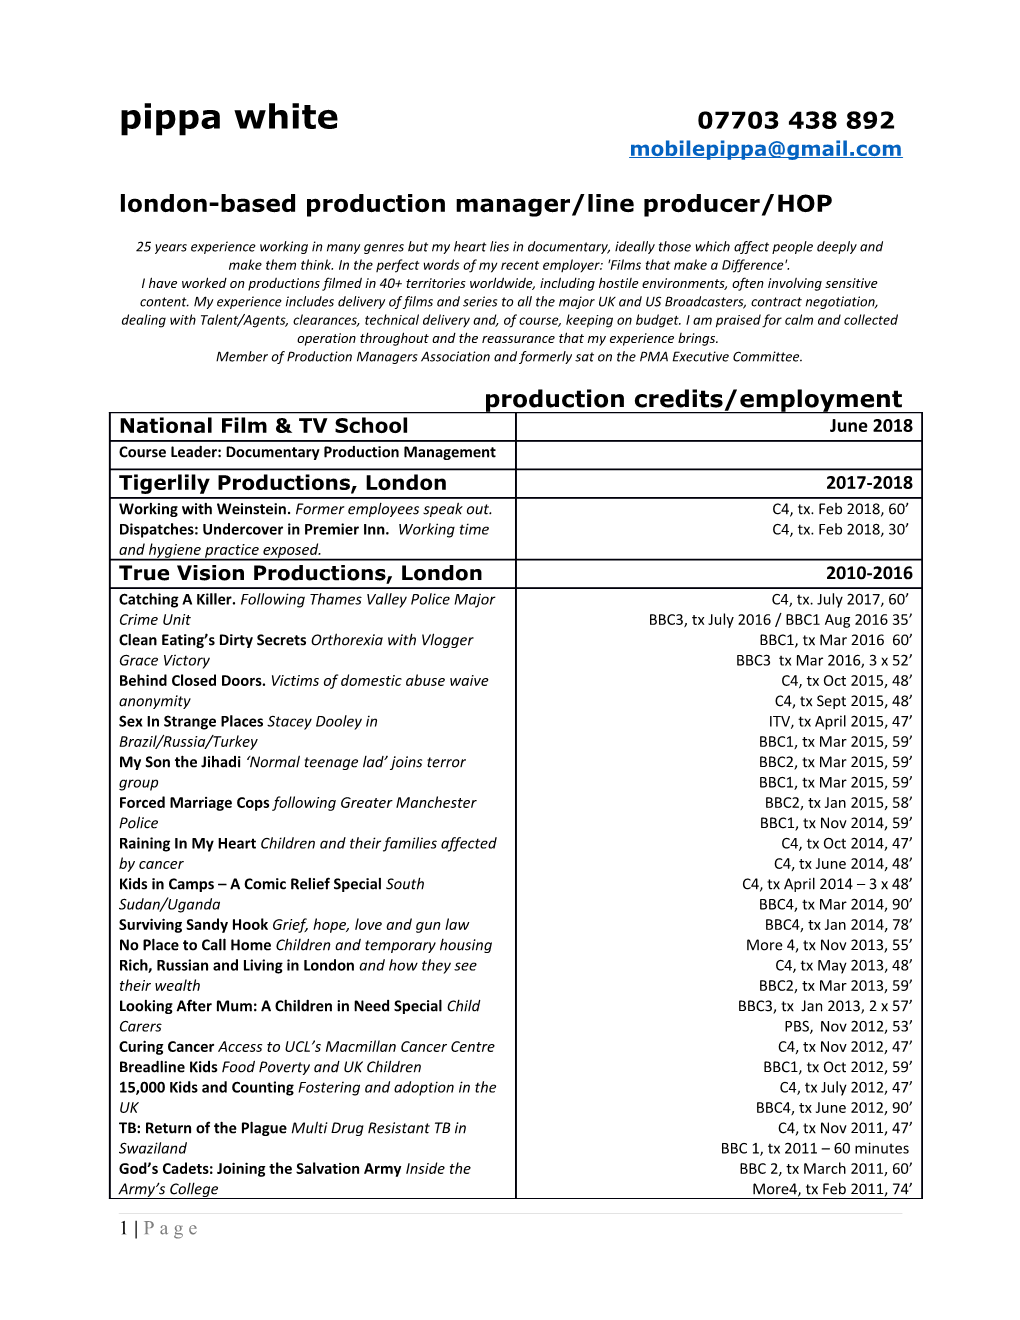 London-Based Production Manager/Line Producer/HOP